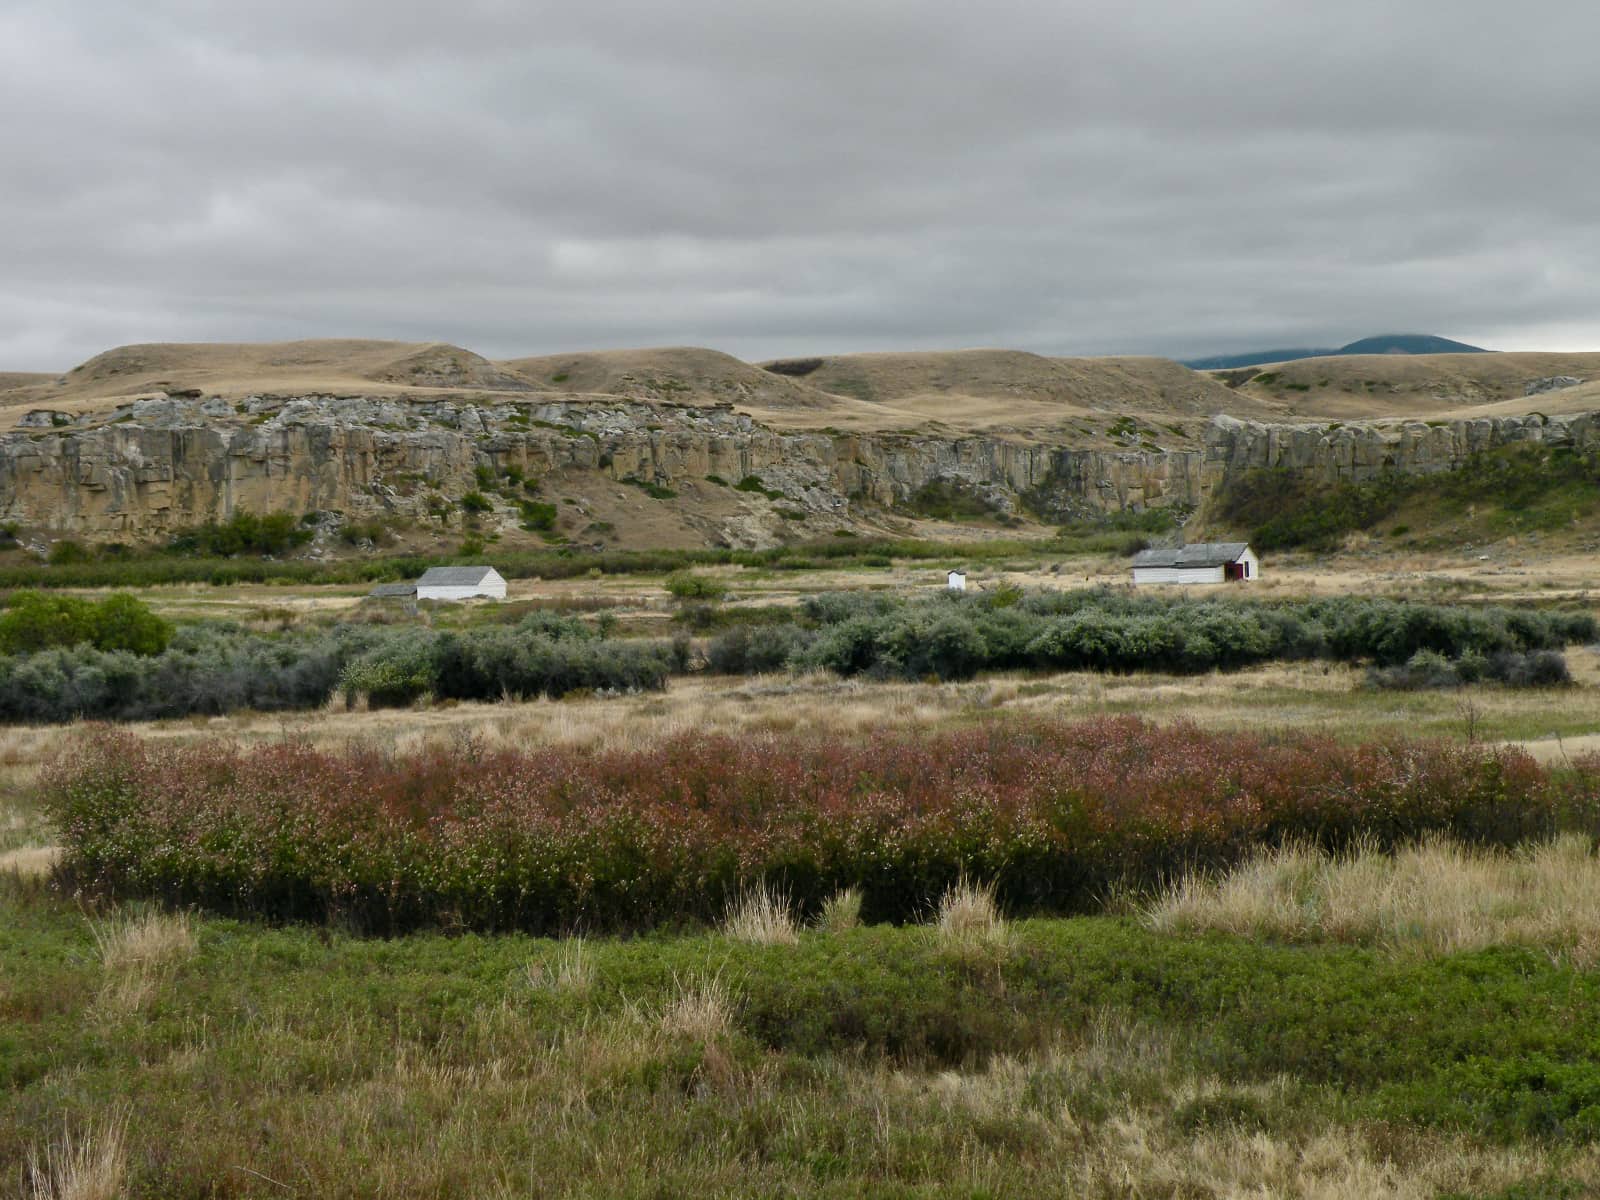 Prairie grass in foreground with hills in background